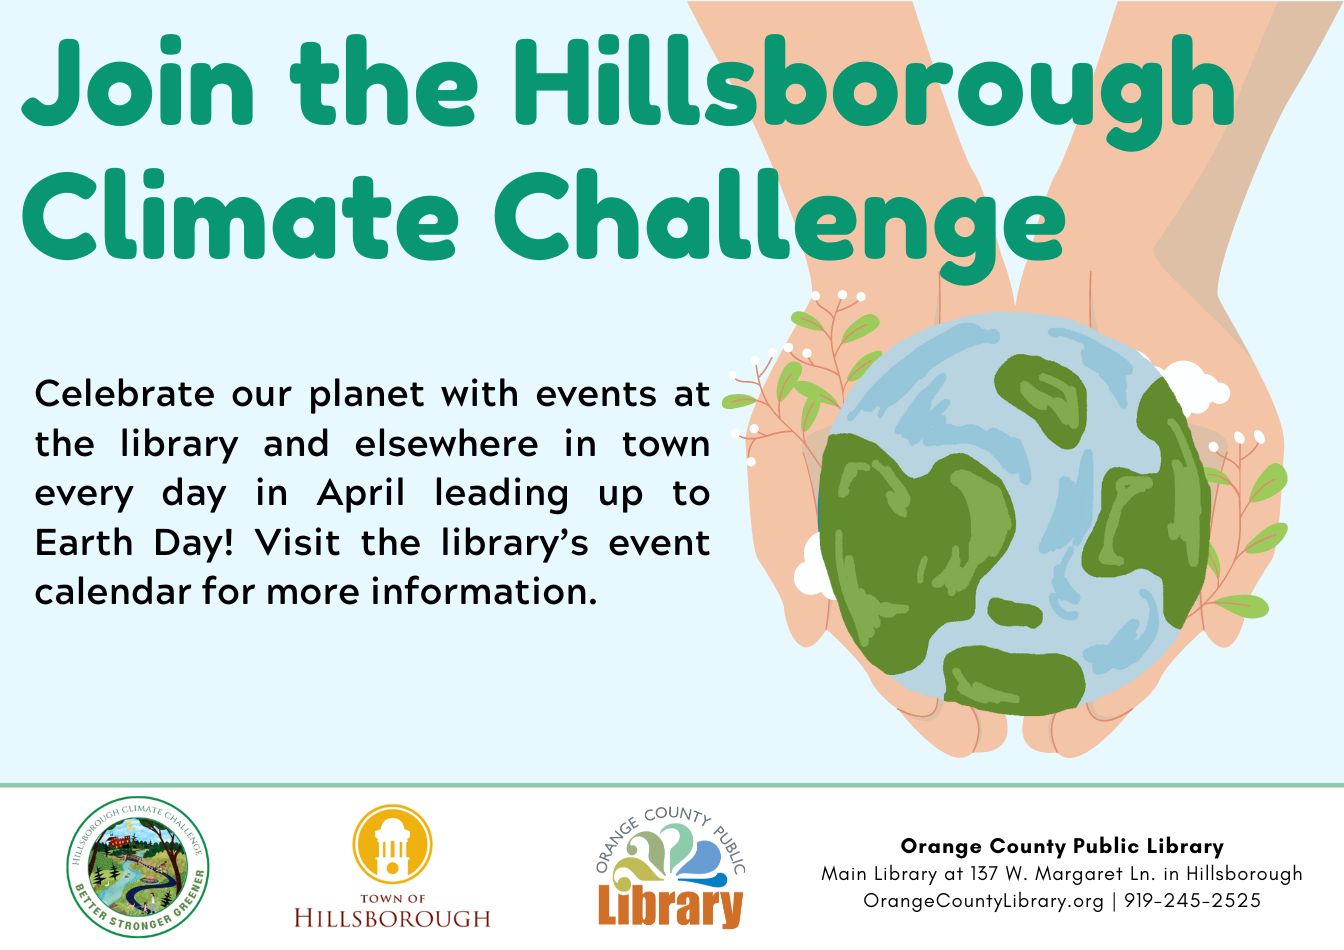 Hillsborough's Sustainability Plan Q & A - Hillsborough Climate Challenge